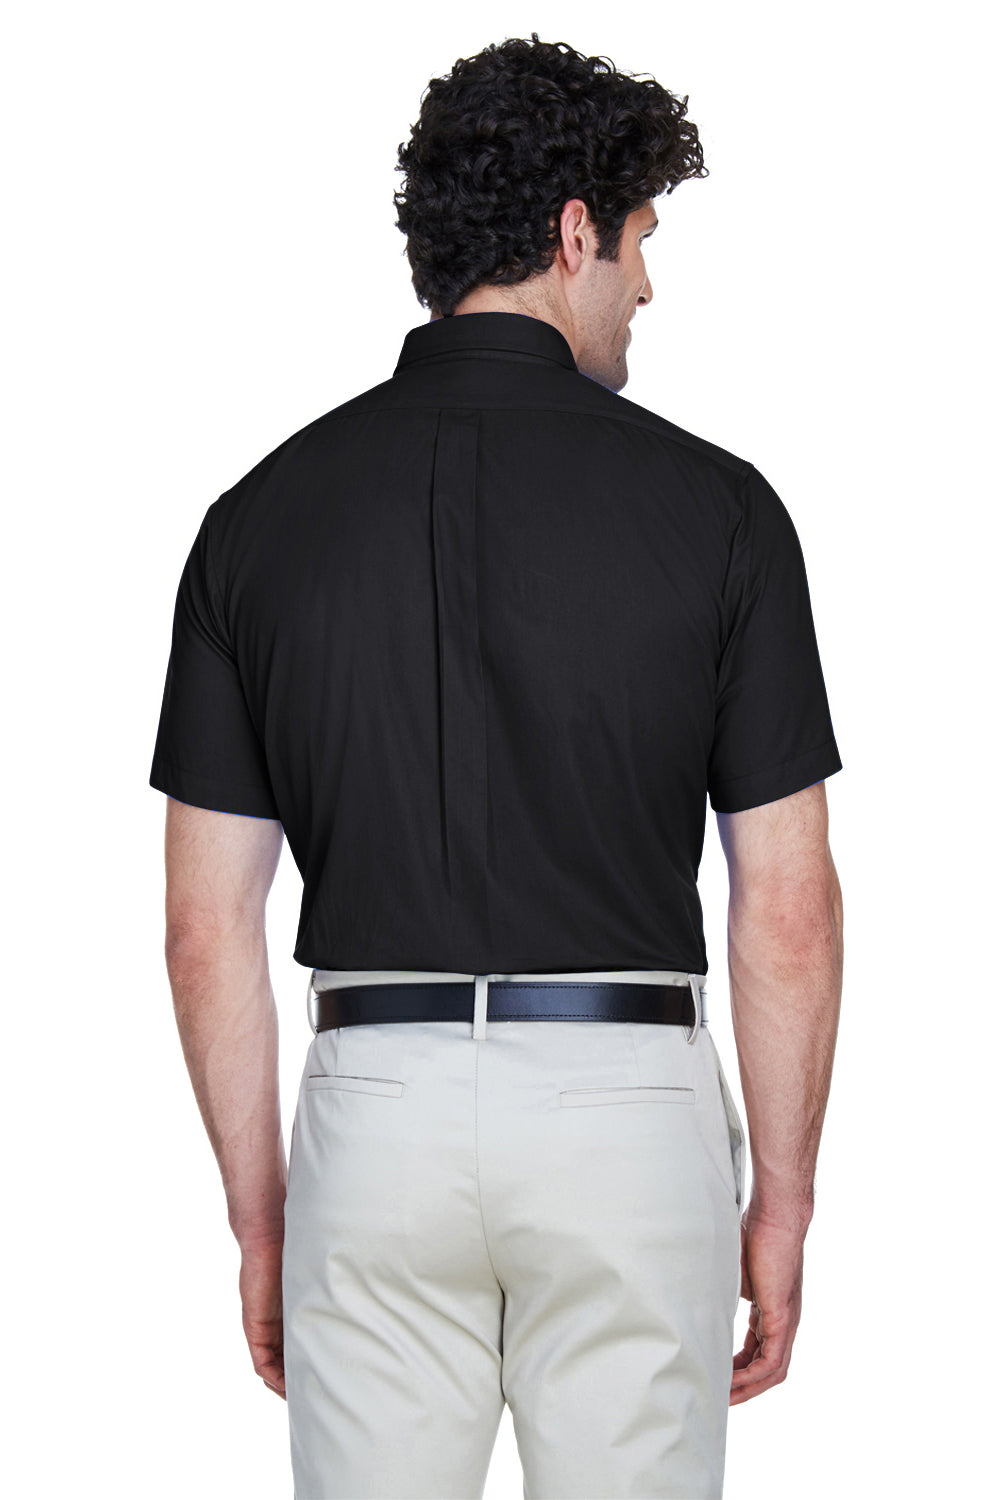 Core 365 88194 Mens Optimum Short Sleeve Button Down Shirt w/ Pocket Black Back